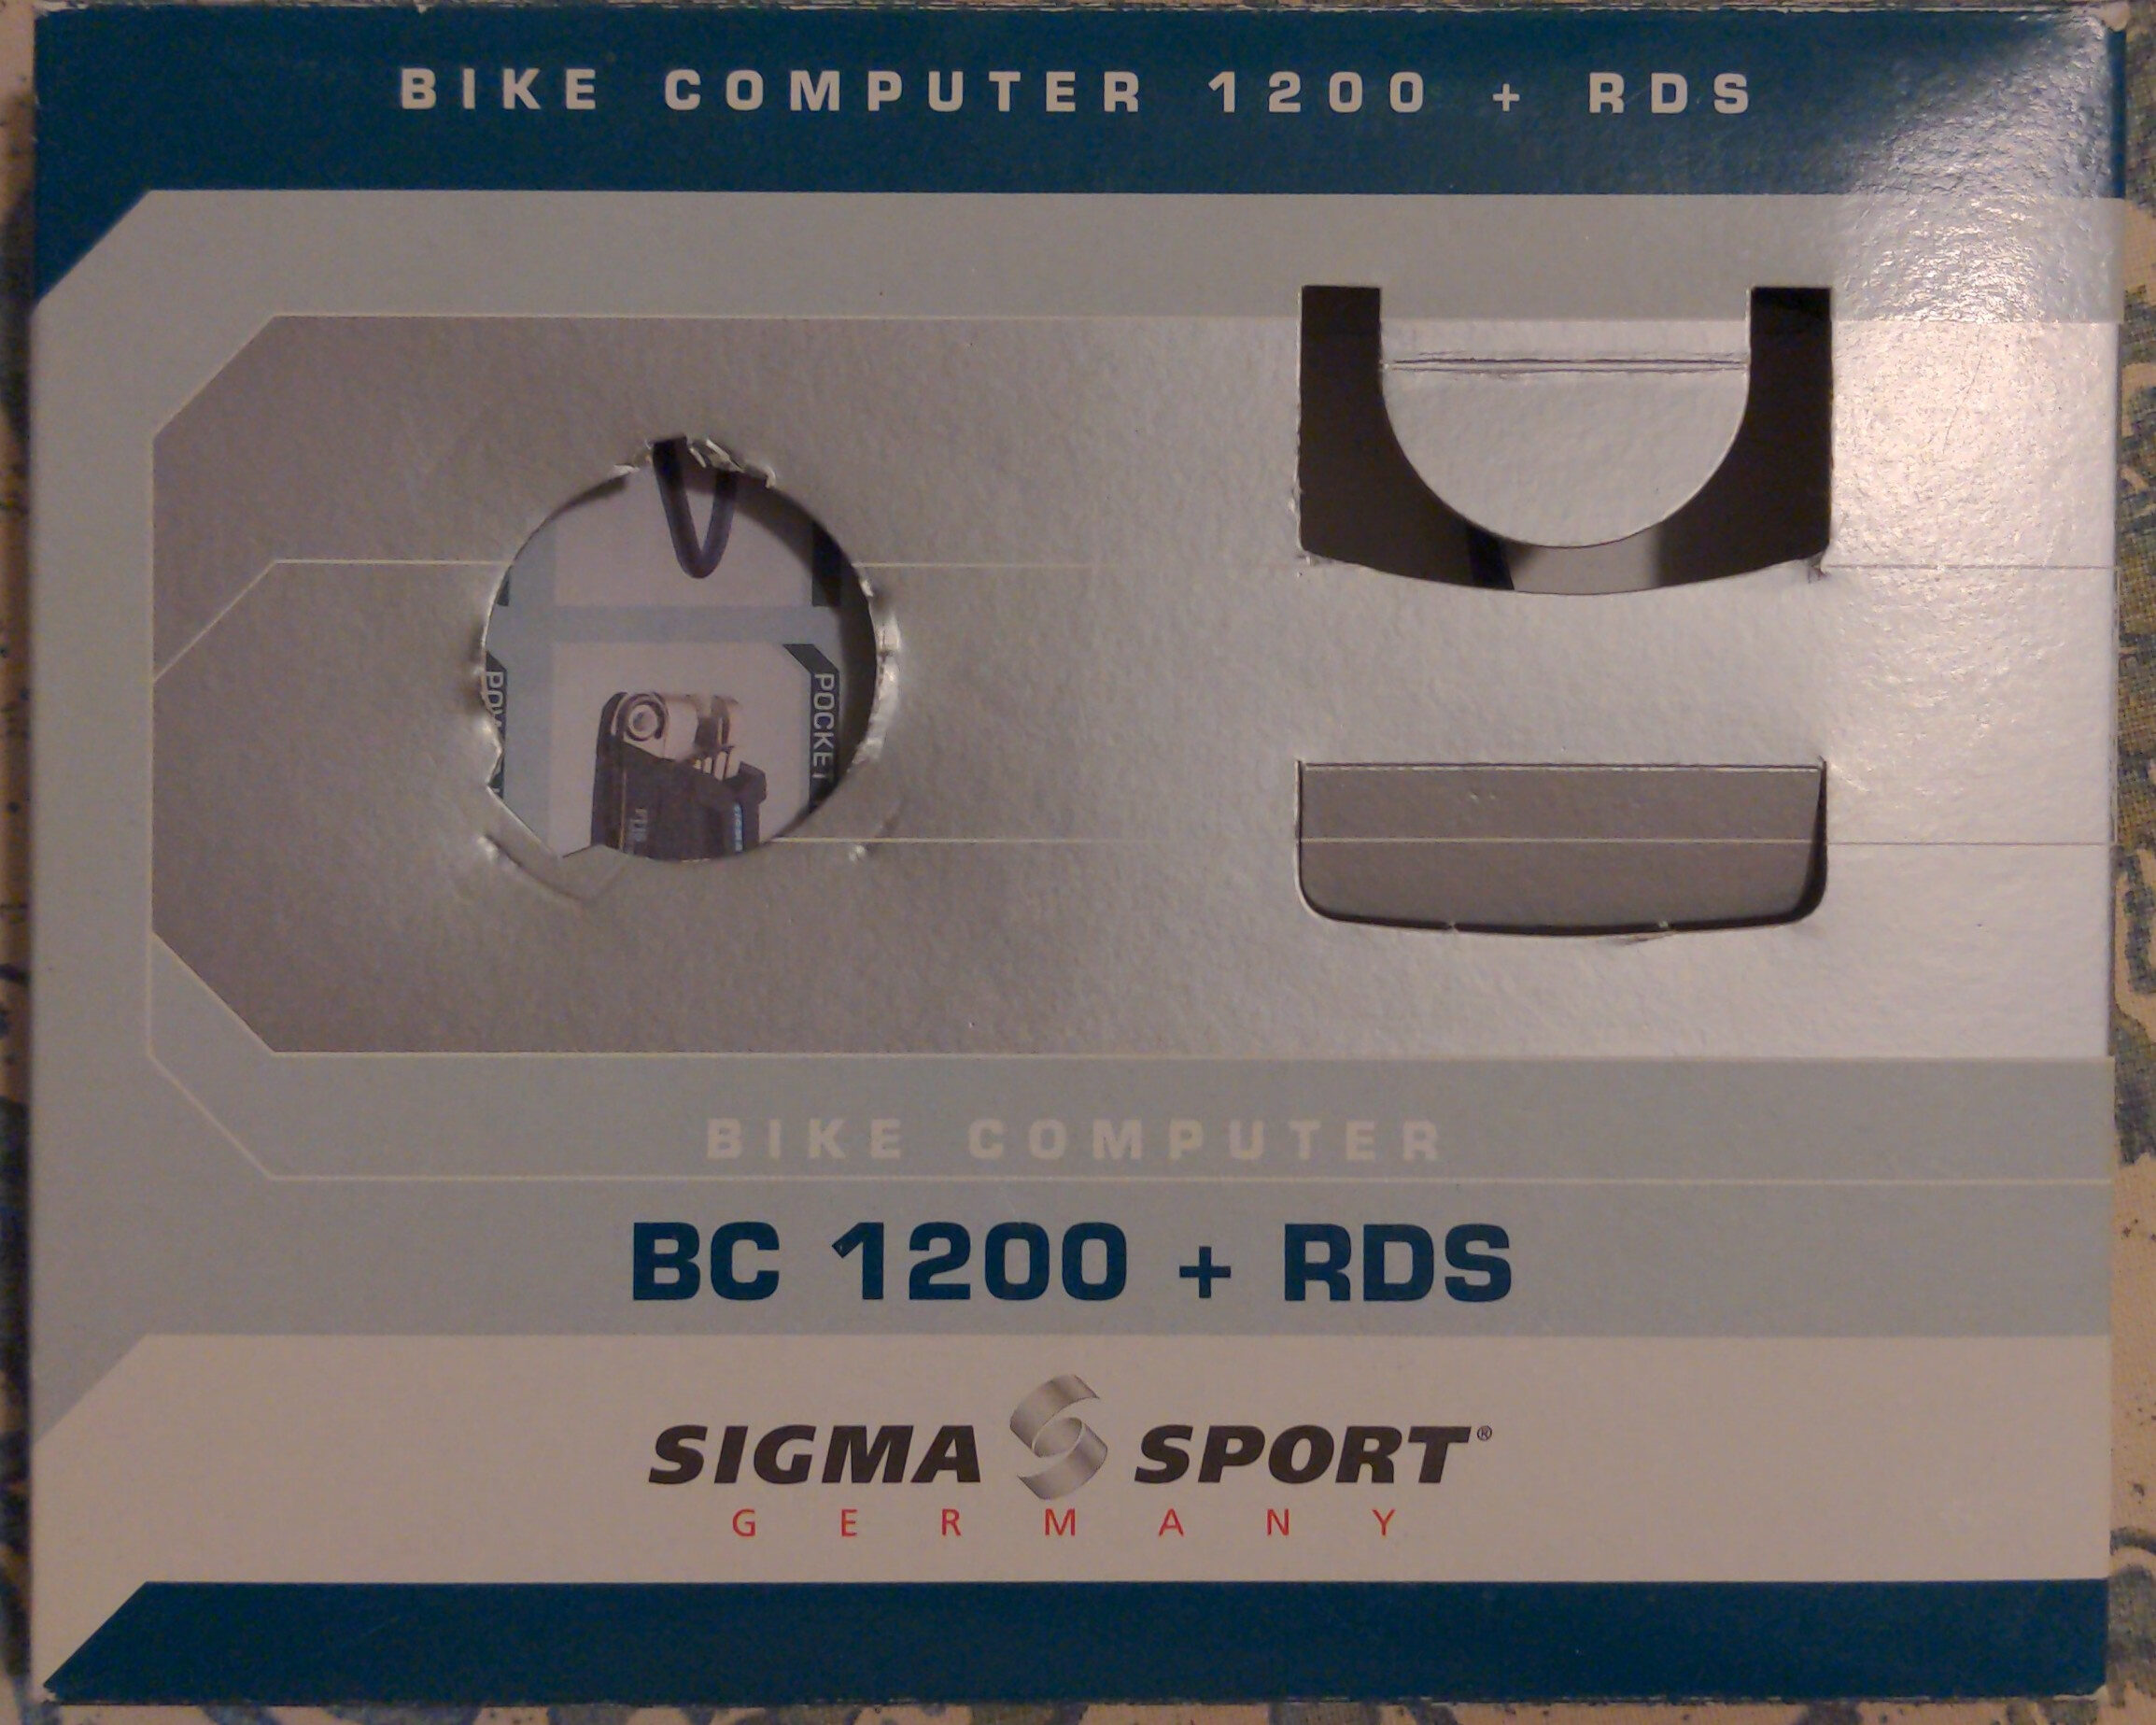 Bike computer 1200 + RDS - Produit - fr